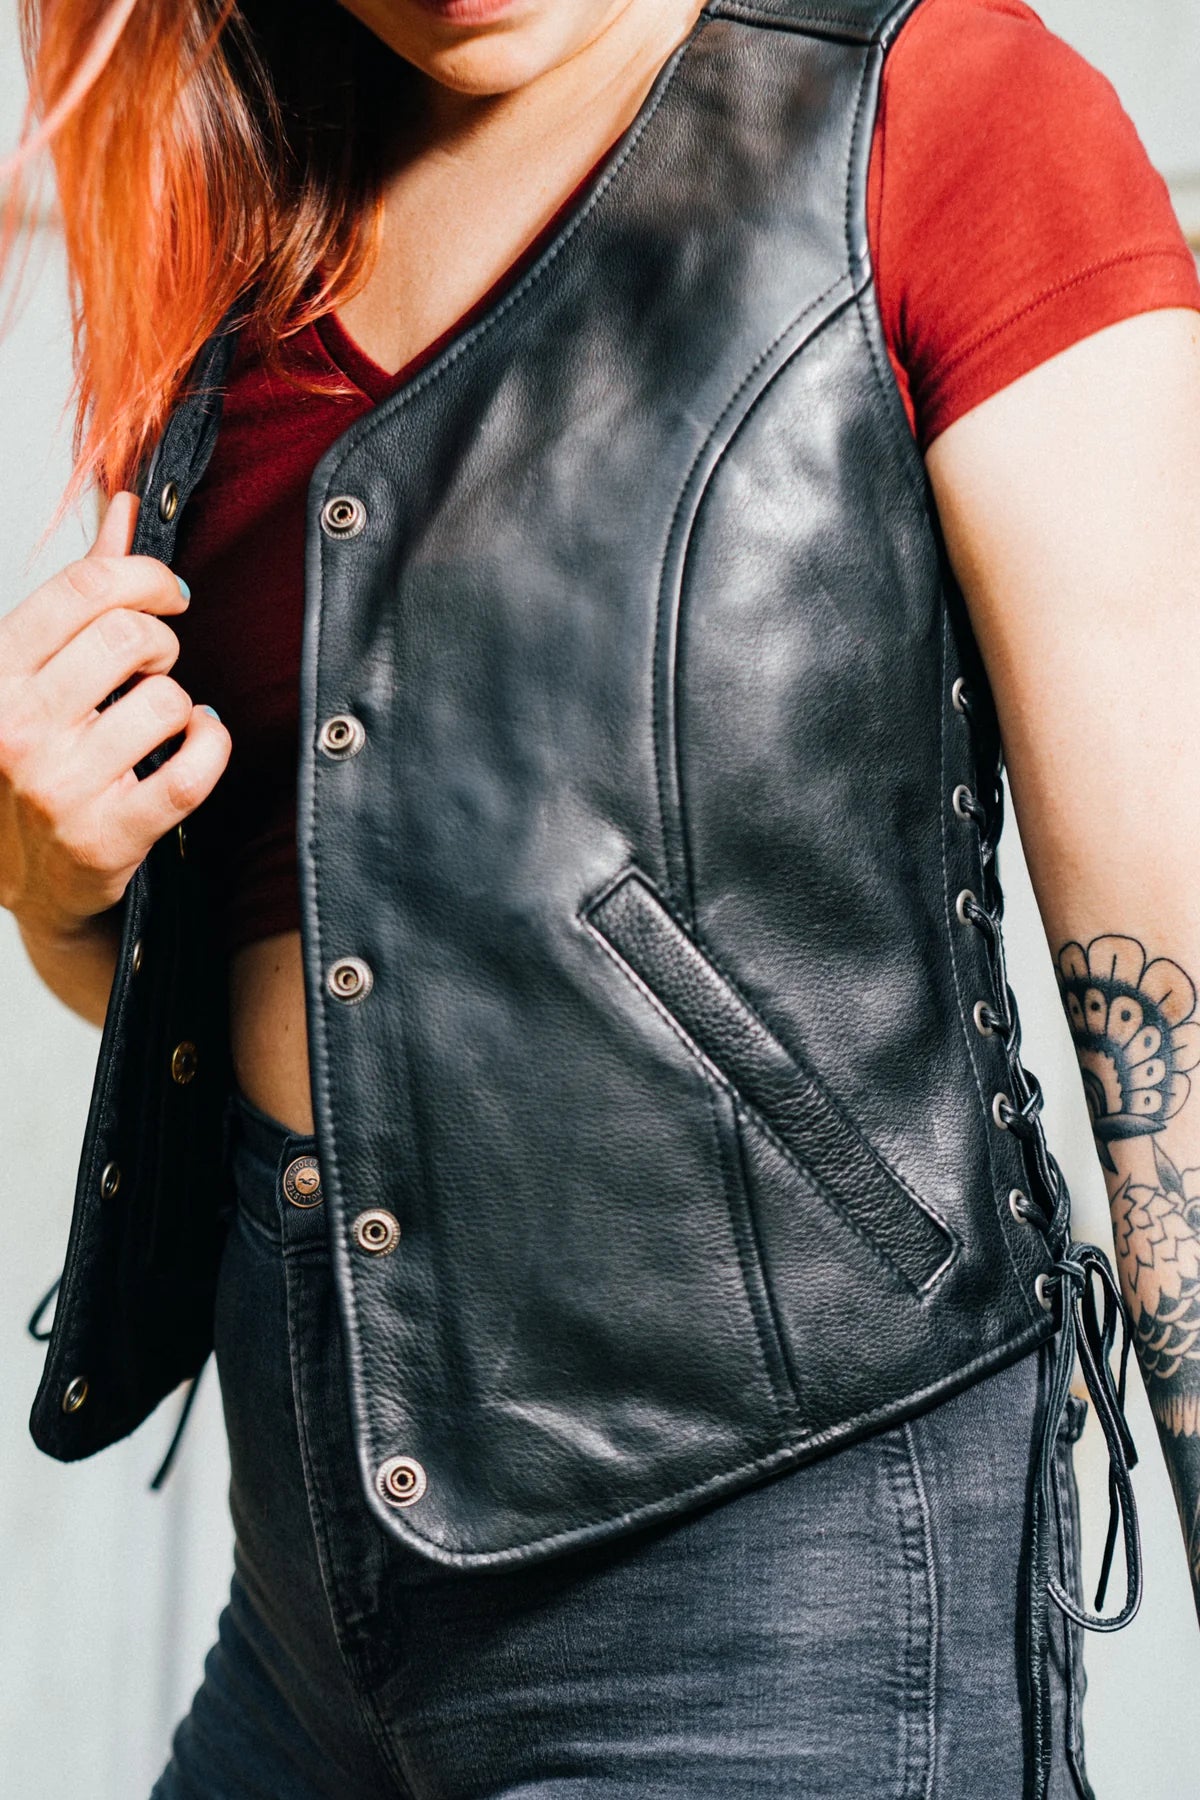 Honey badger women's motorcycle leather vest woman wearing